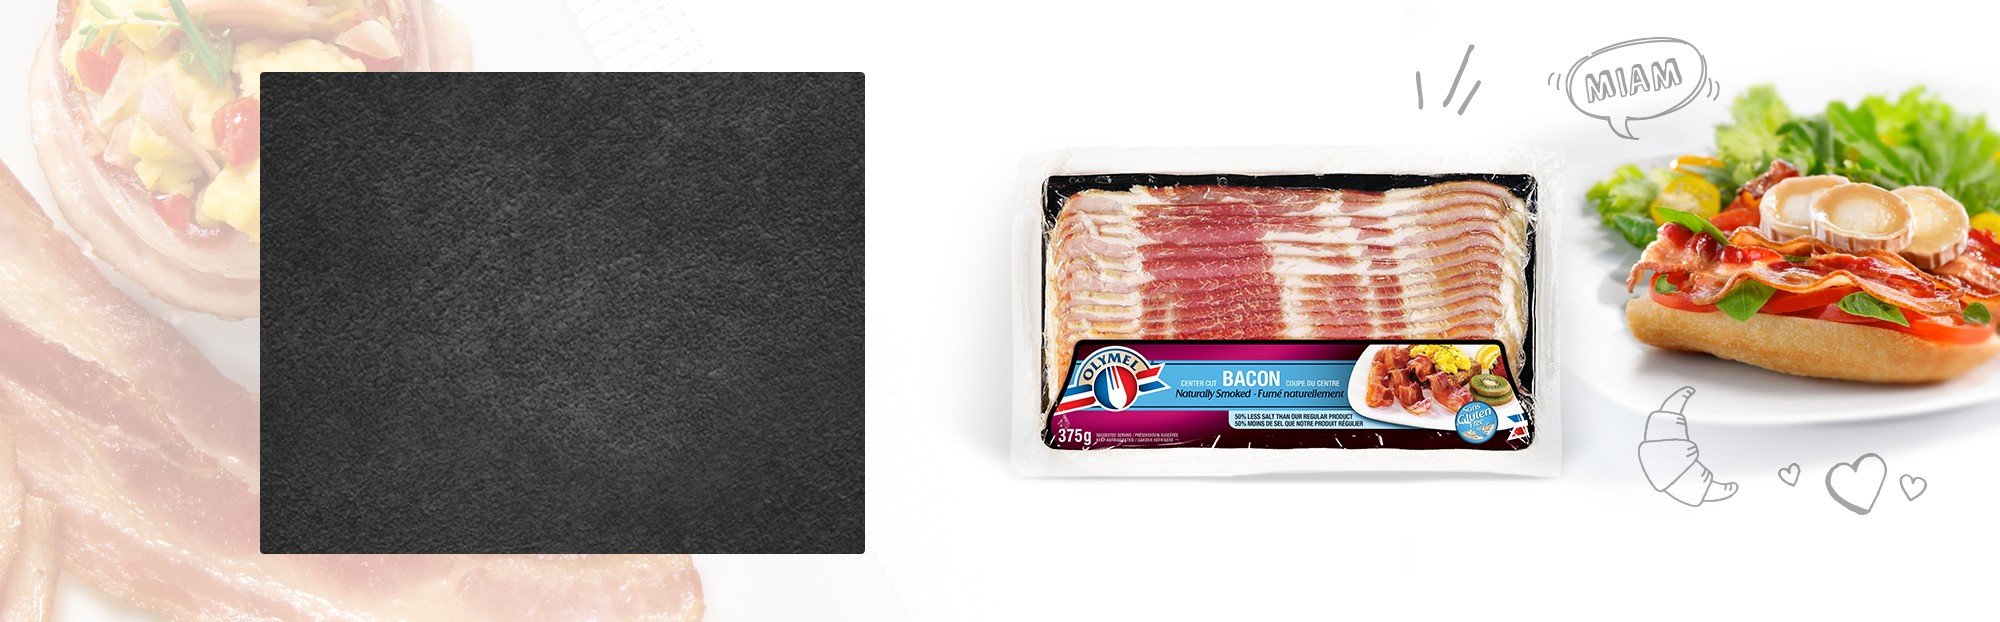 Naturally Smoked Bacon 33% Less Salt